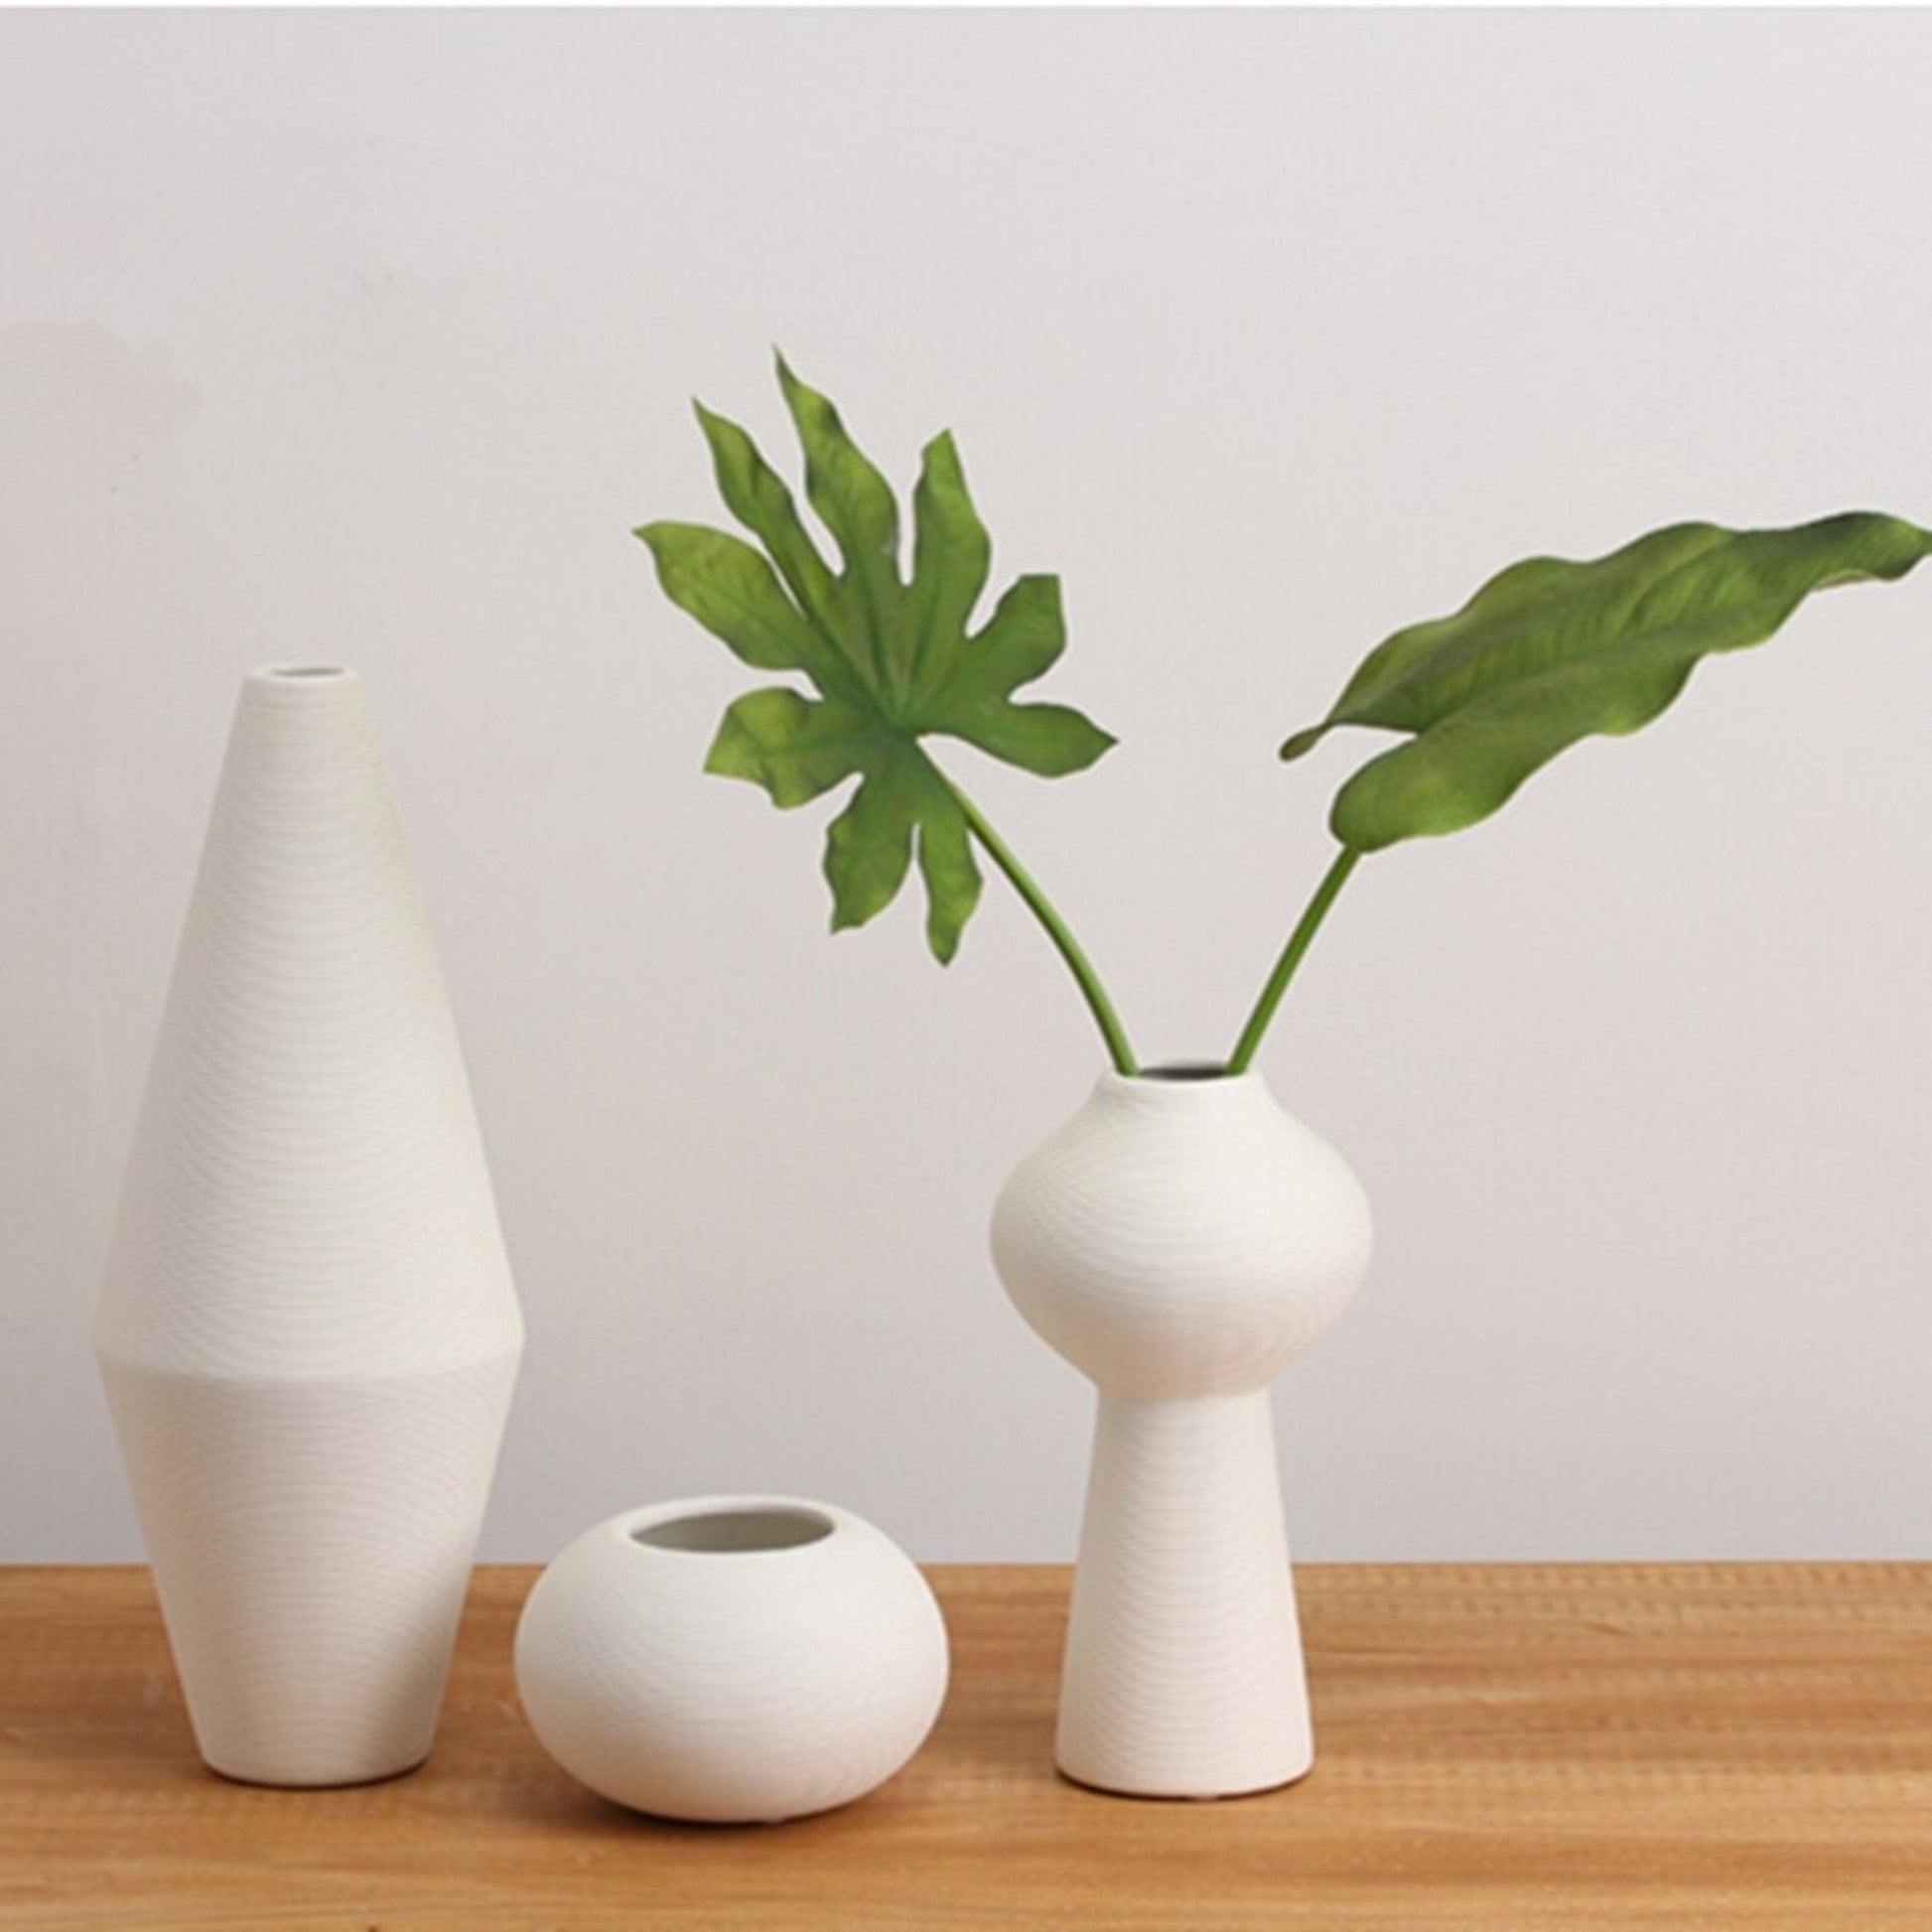 Japanese Ceramic Vases | White Ceramic Vase, Minimalist Vase Ceramic, Small White Ceramic Vase, Ceramic Vase Set, Table Vases - -